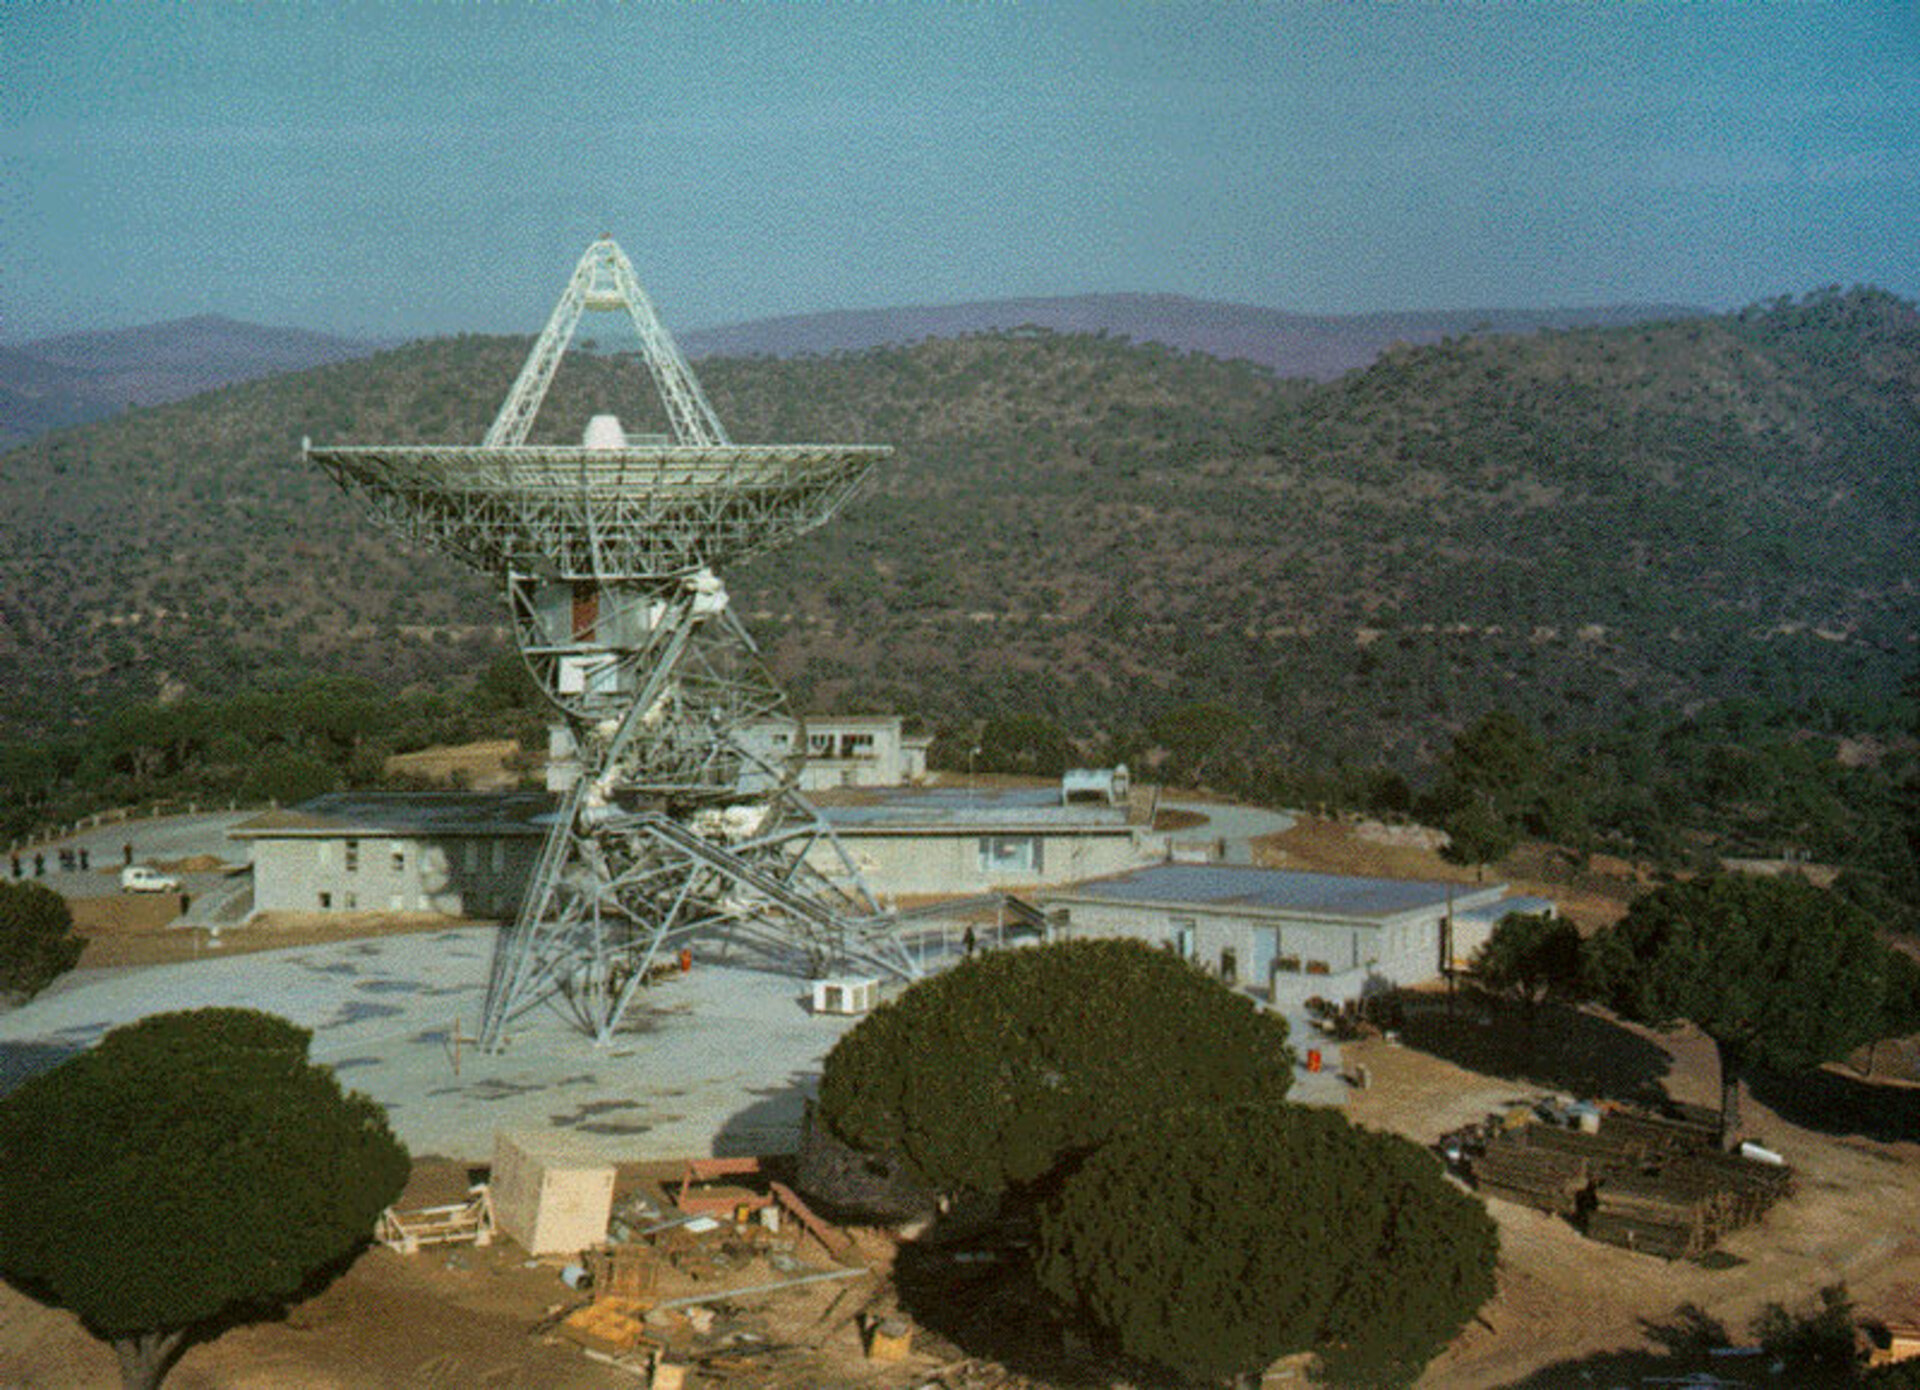 NASA DSN 31 station at Cebreros in the 1970s